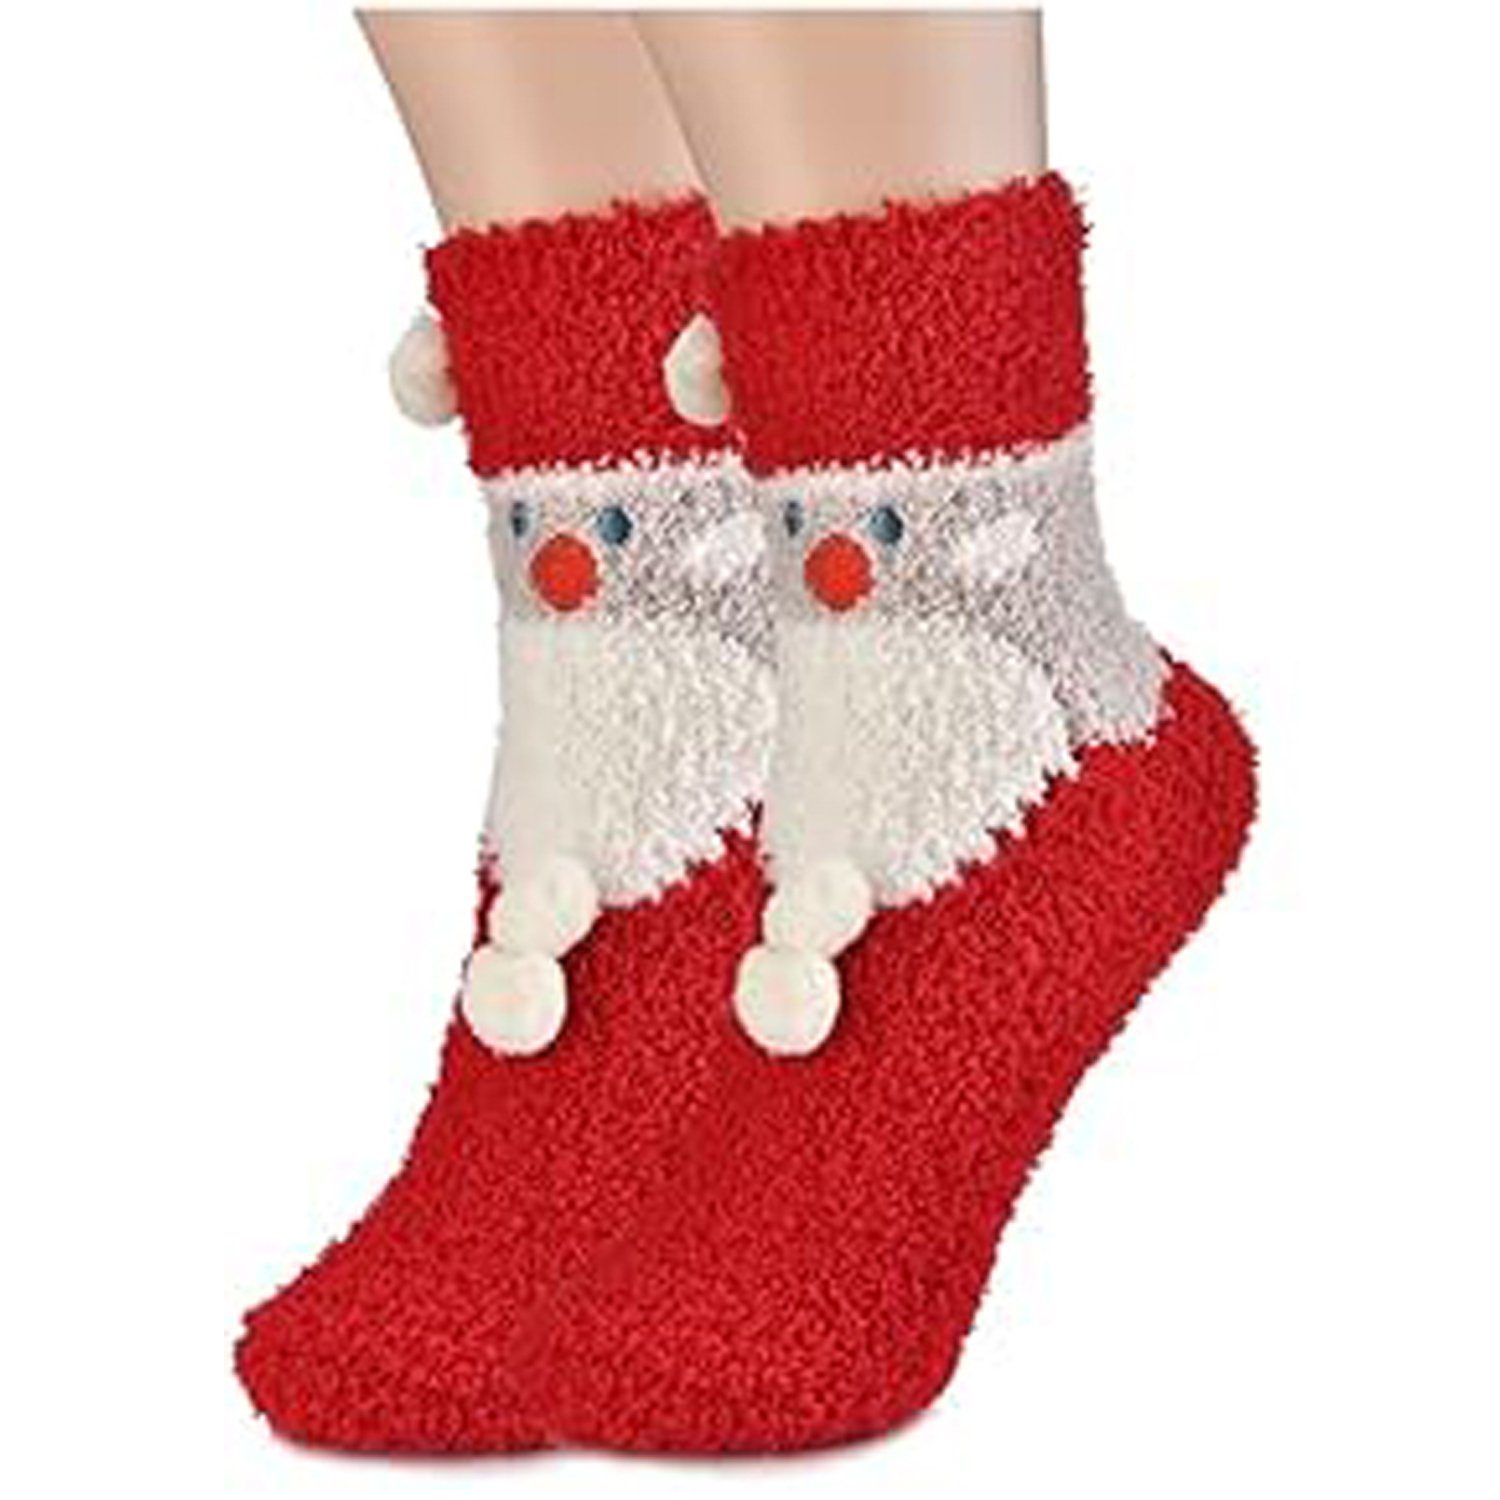 aikidio socks home Basicsocken winter Christmas socks socks warm